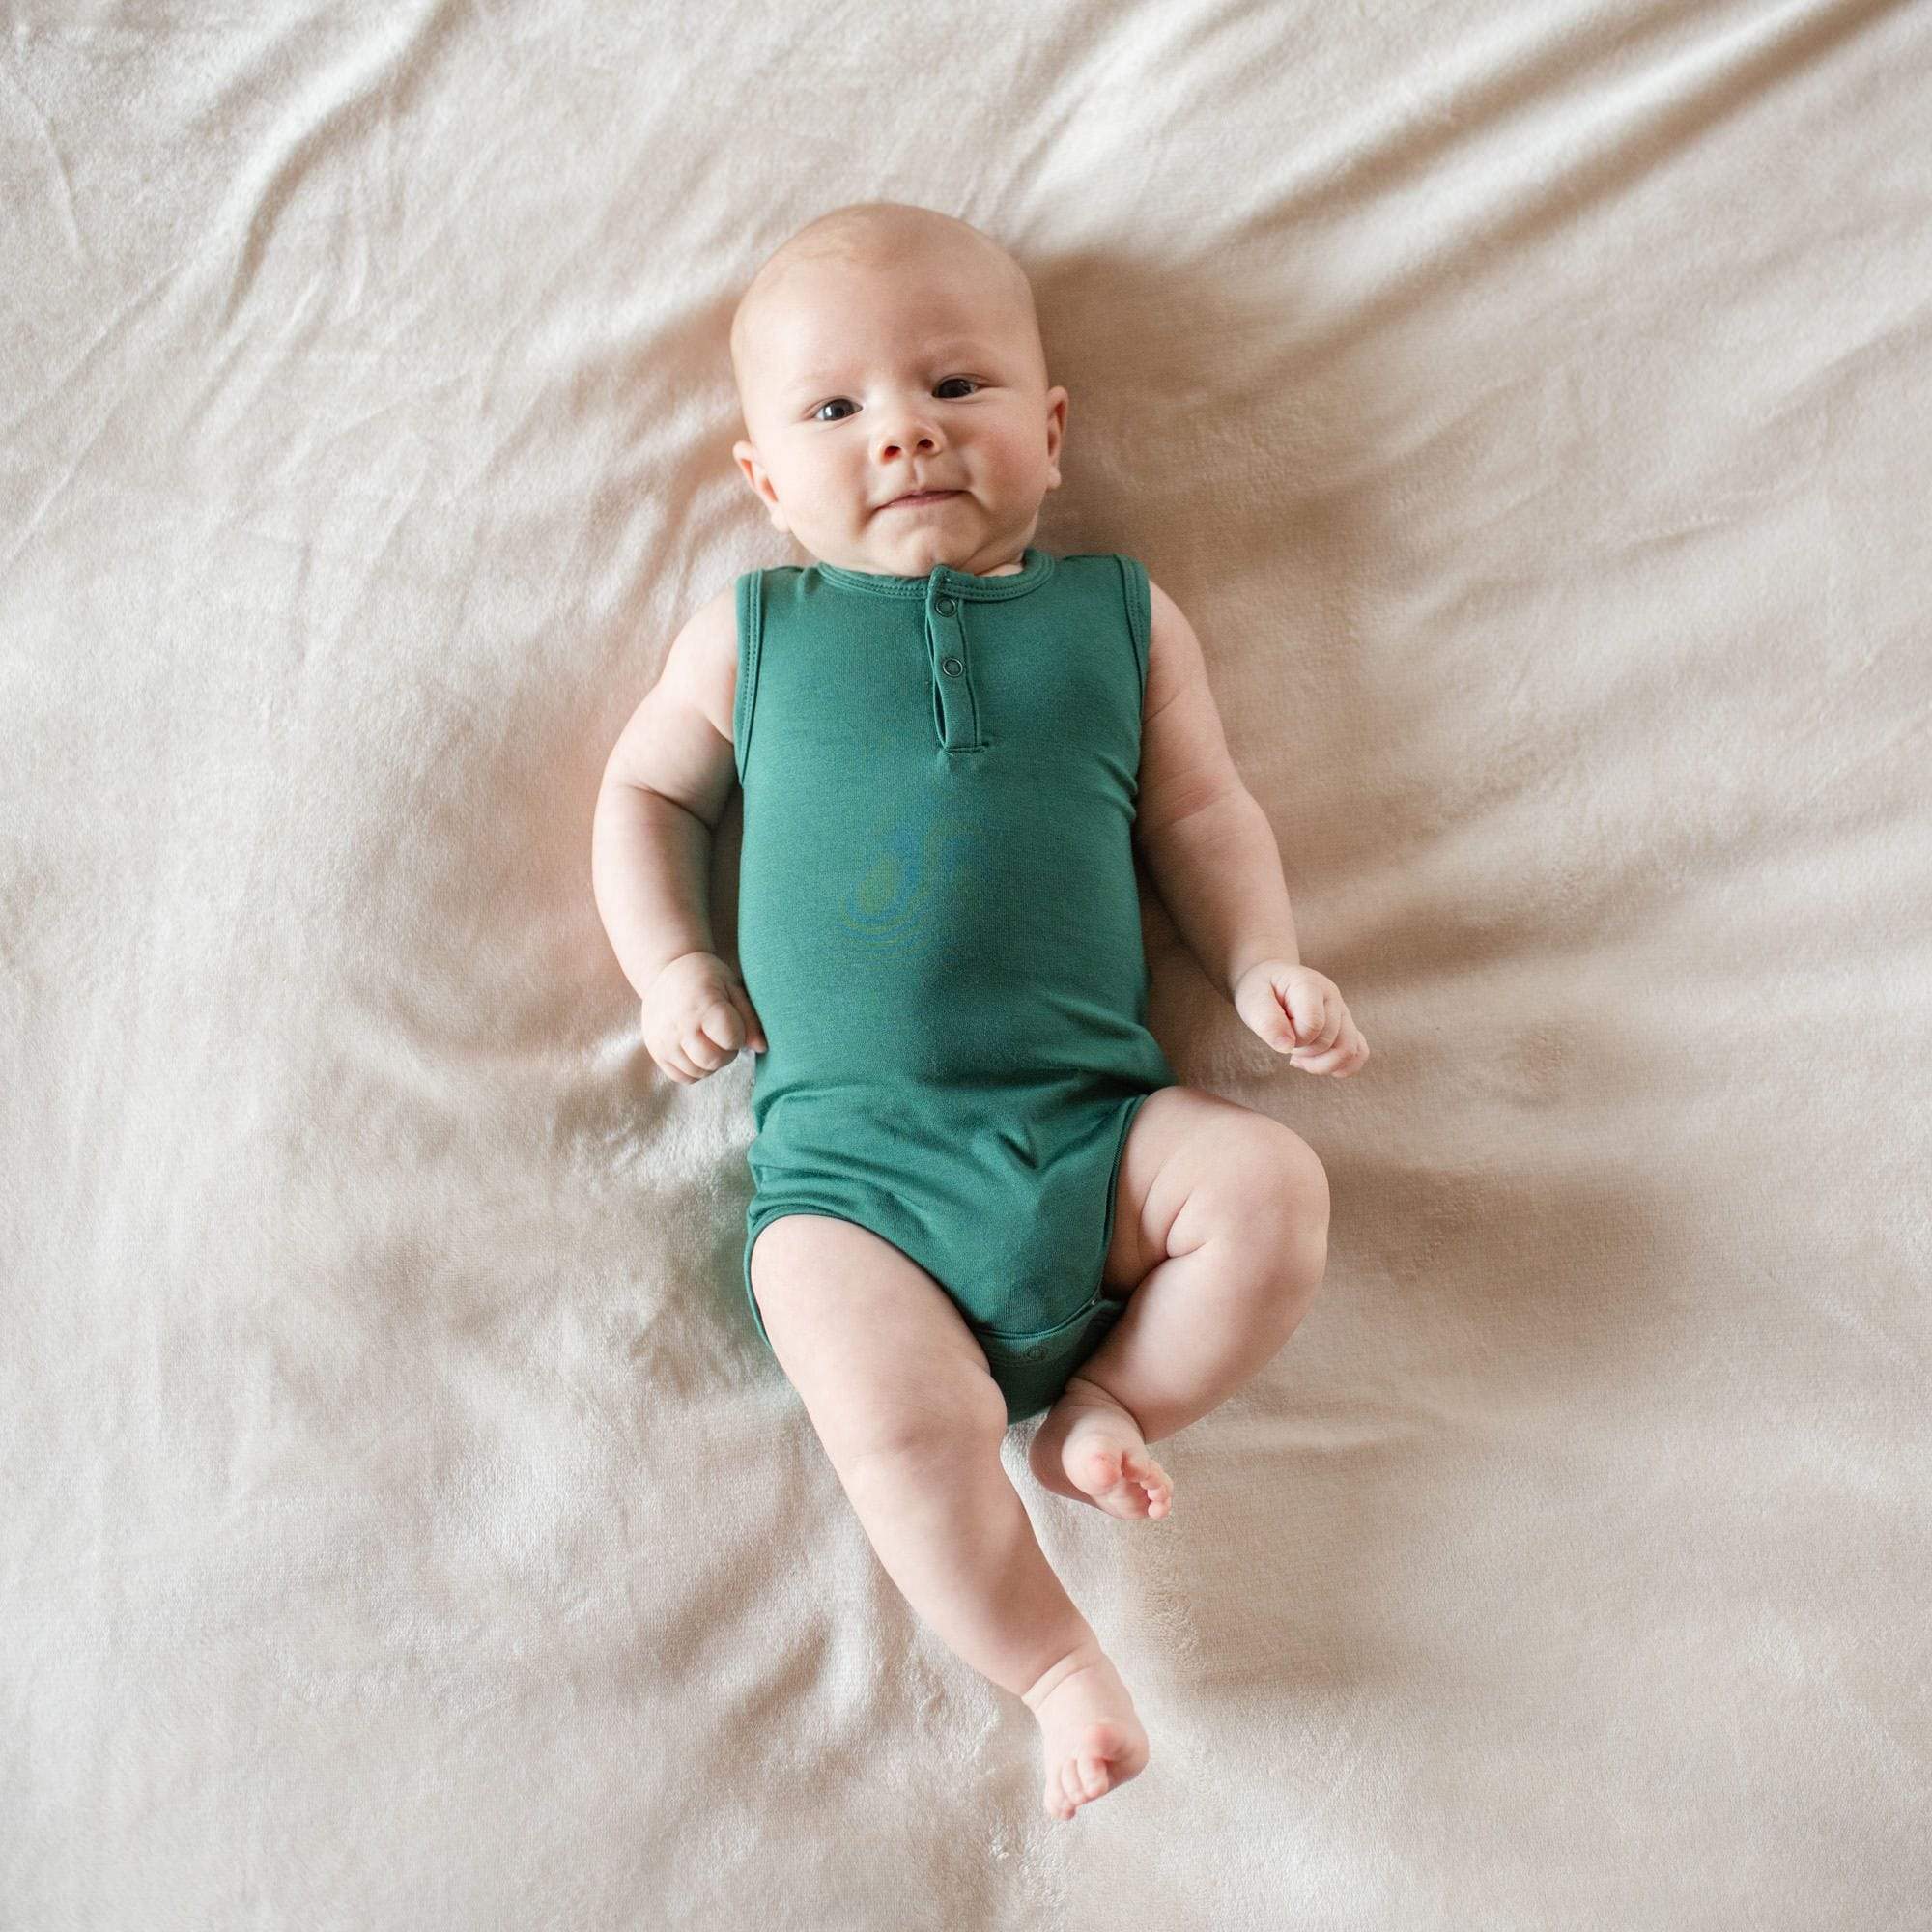 Baby wearing Kyte Baby Sleeveless infant Bodysuit in Emerald